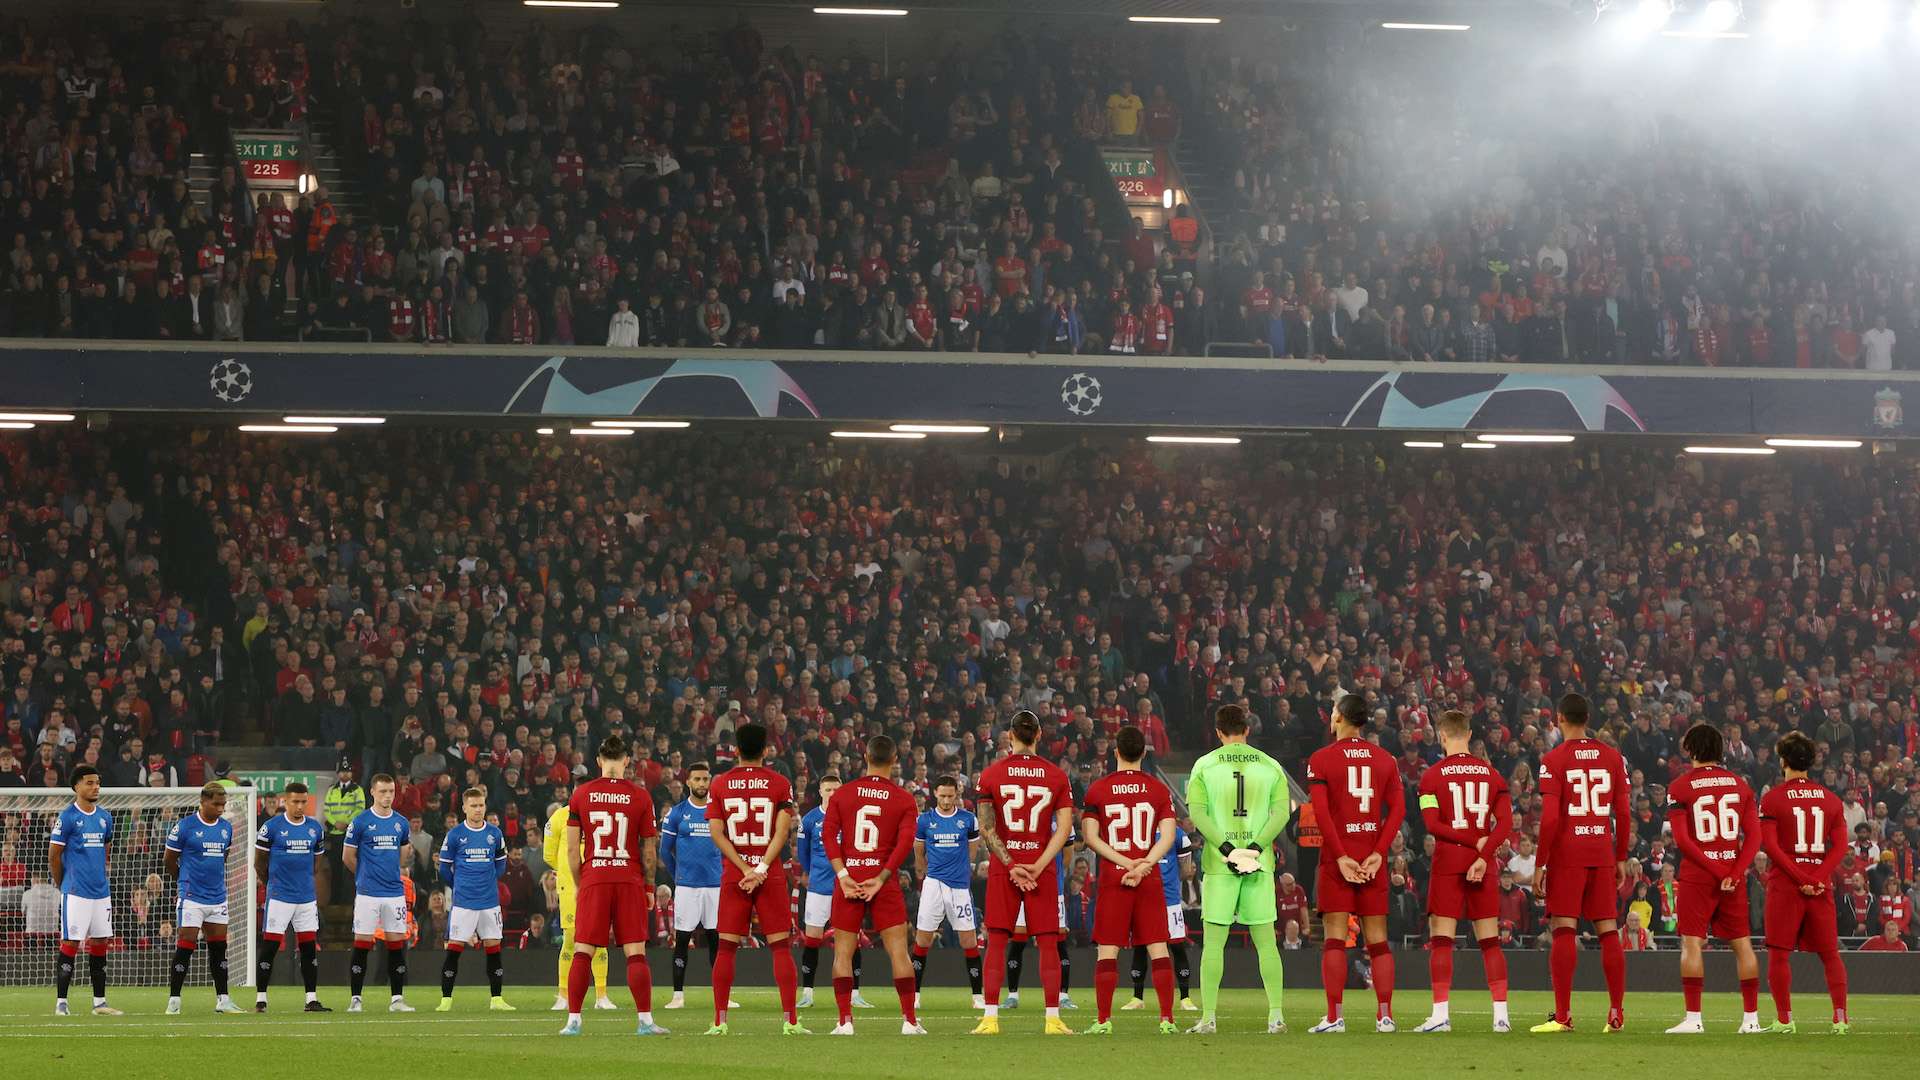 Liverpool vs Rangers - Moment of silence